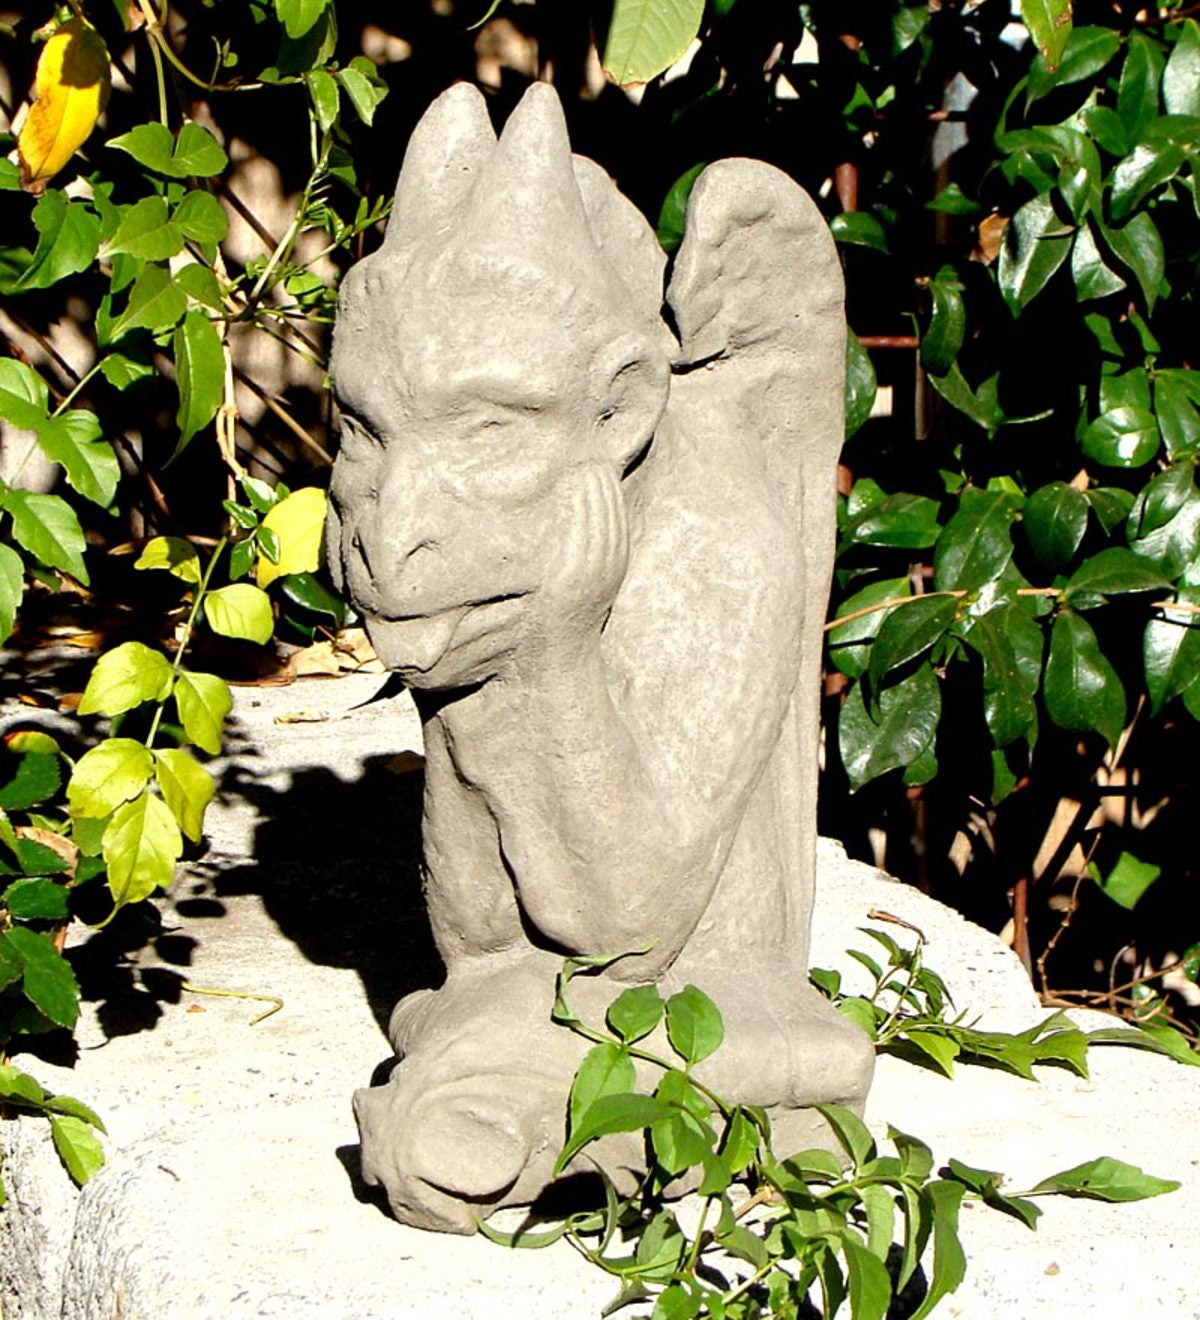 Handcrafted Small Gargoyle Garden Sculpture